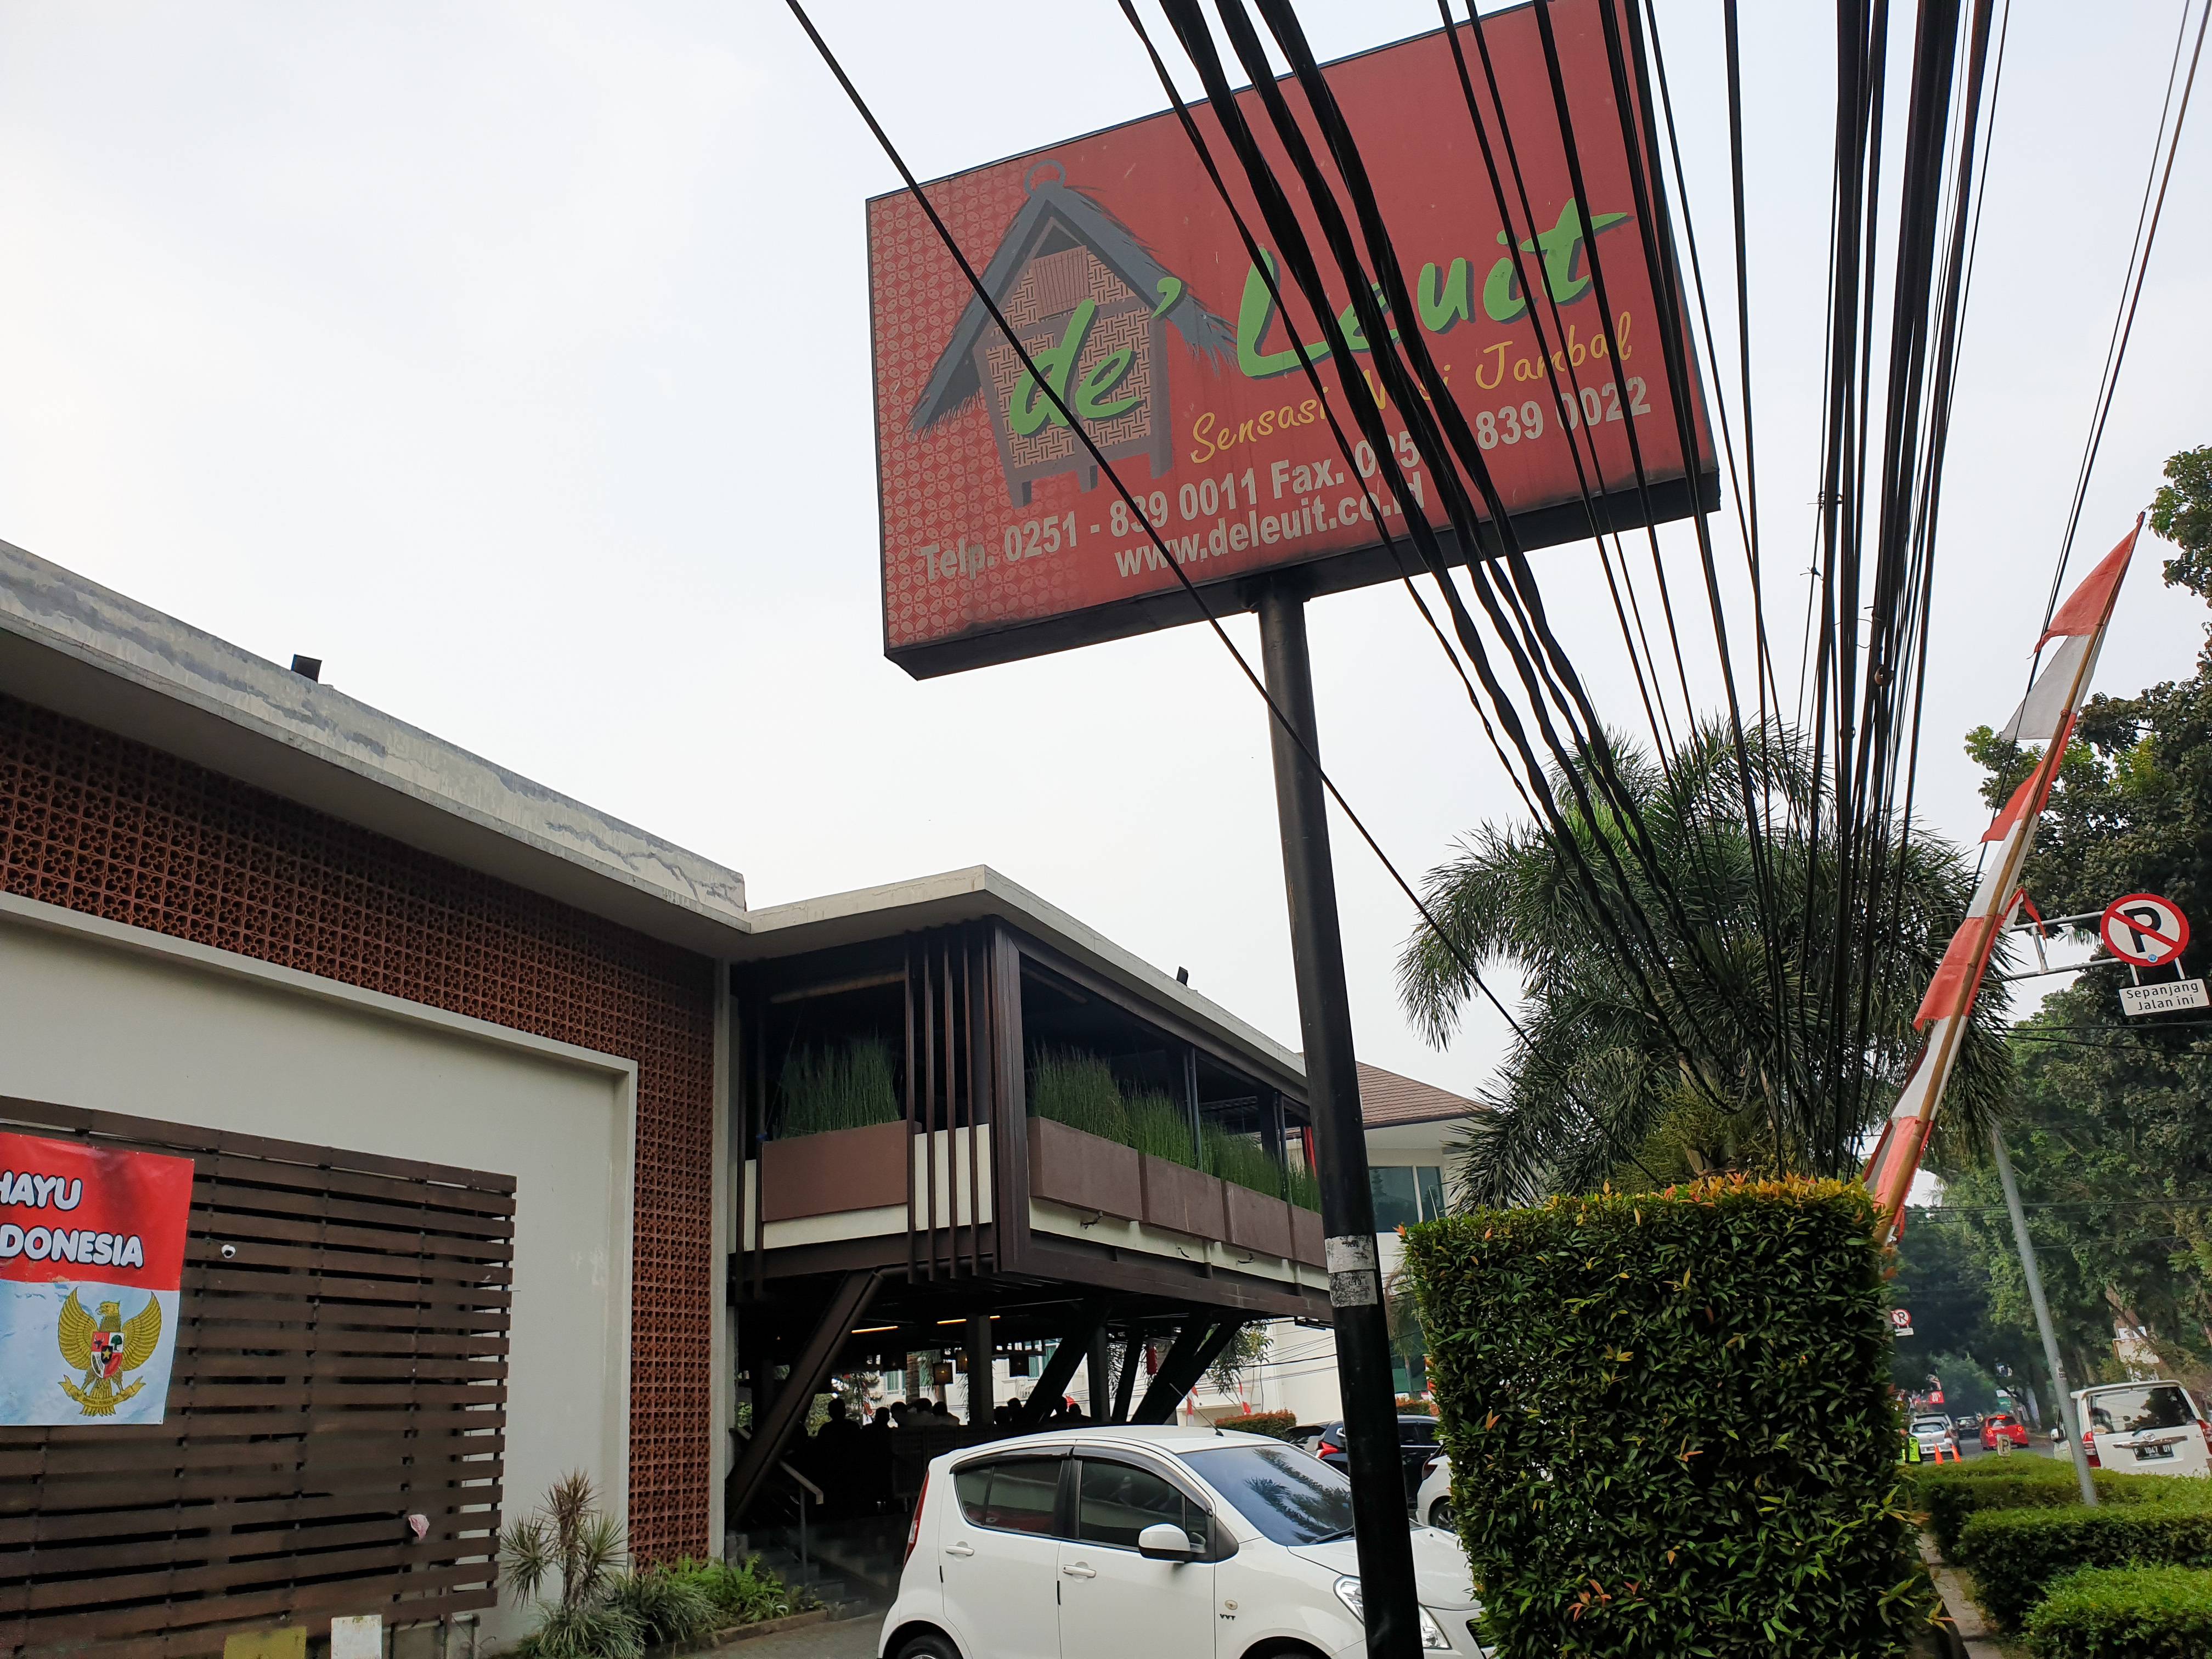 de Leuit, Restoran Sunda yang ada di Bogor